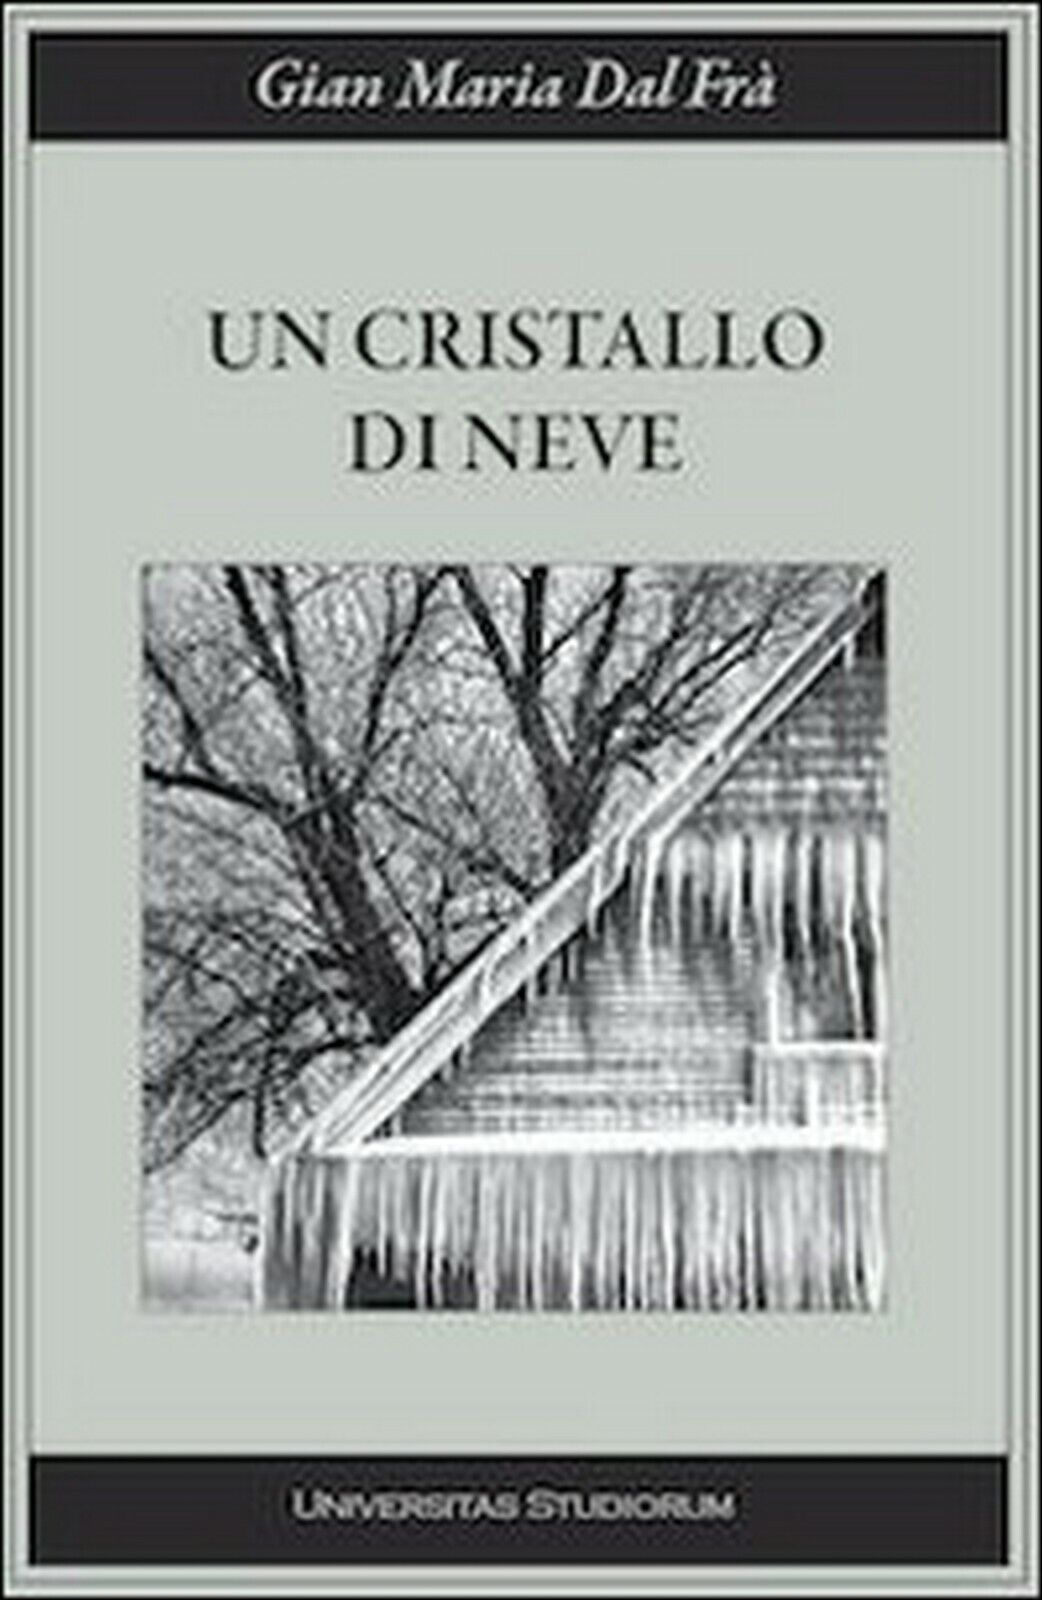 Un cristallo di neve  di G. Maria Dal Fr?,  2015,  Universitas Studiorum